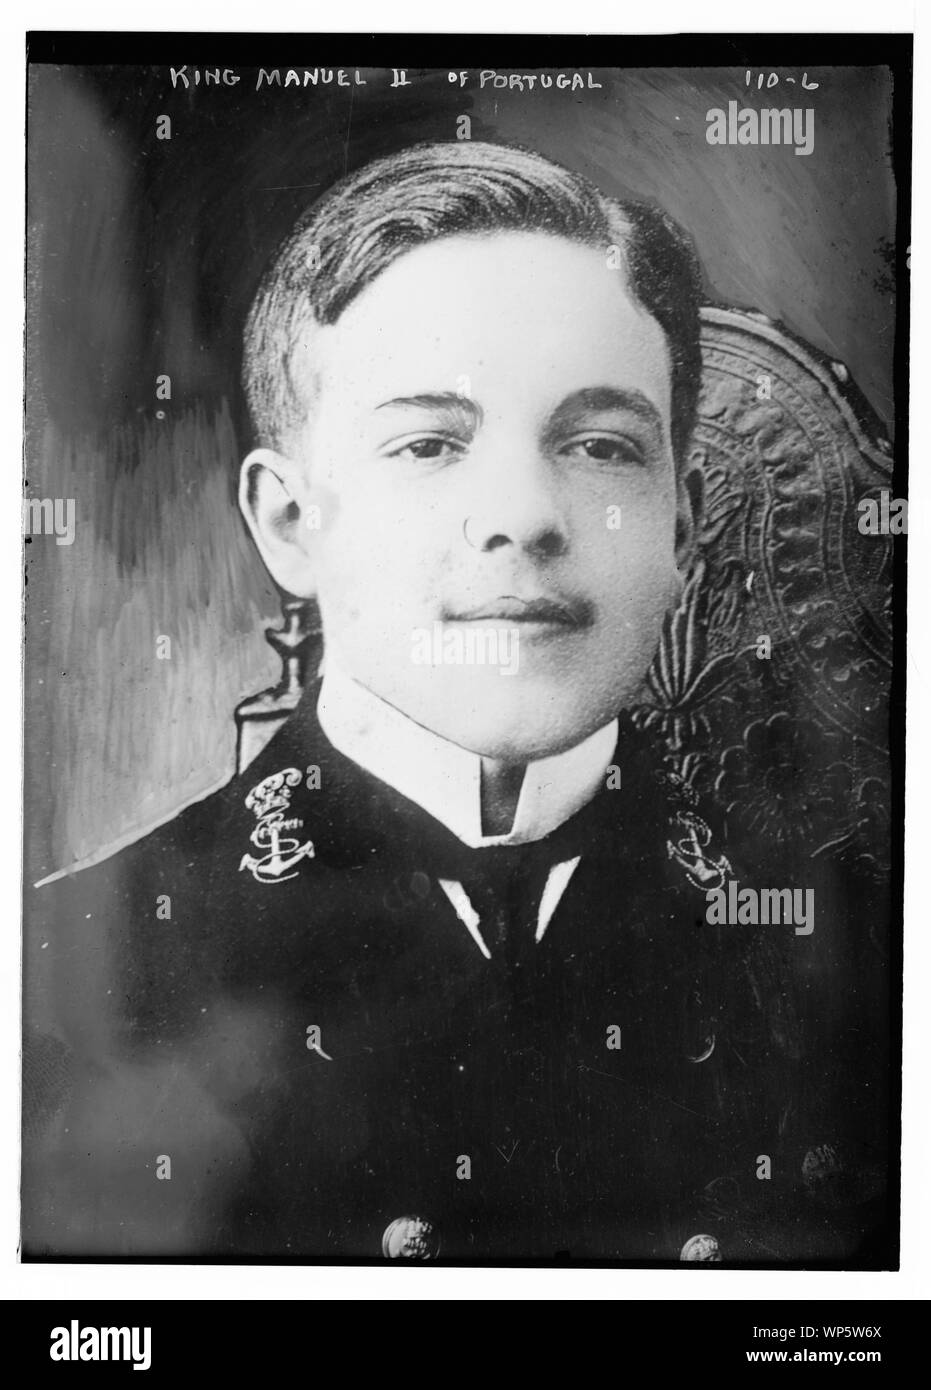 King Manuel II of Portugal, portrait bust Stock Photo